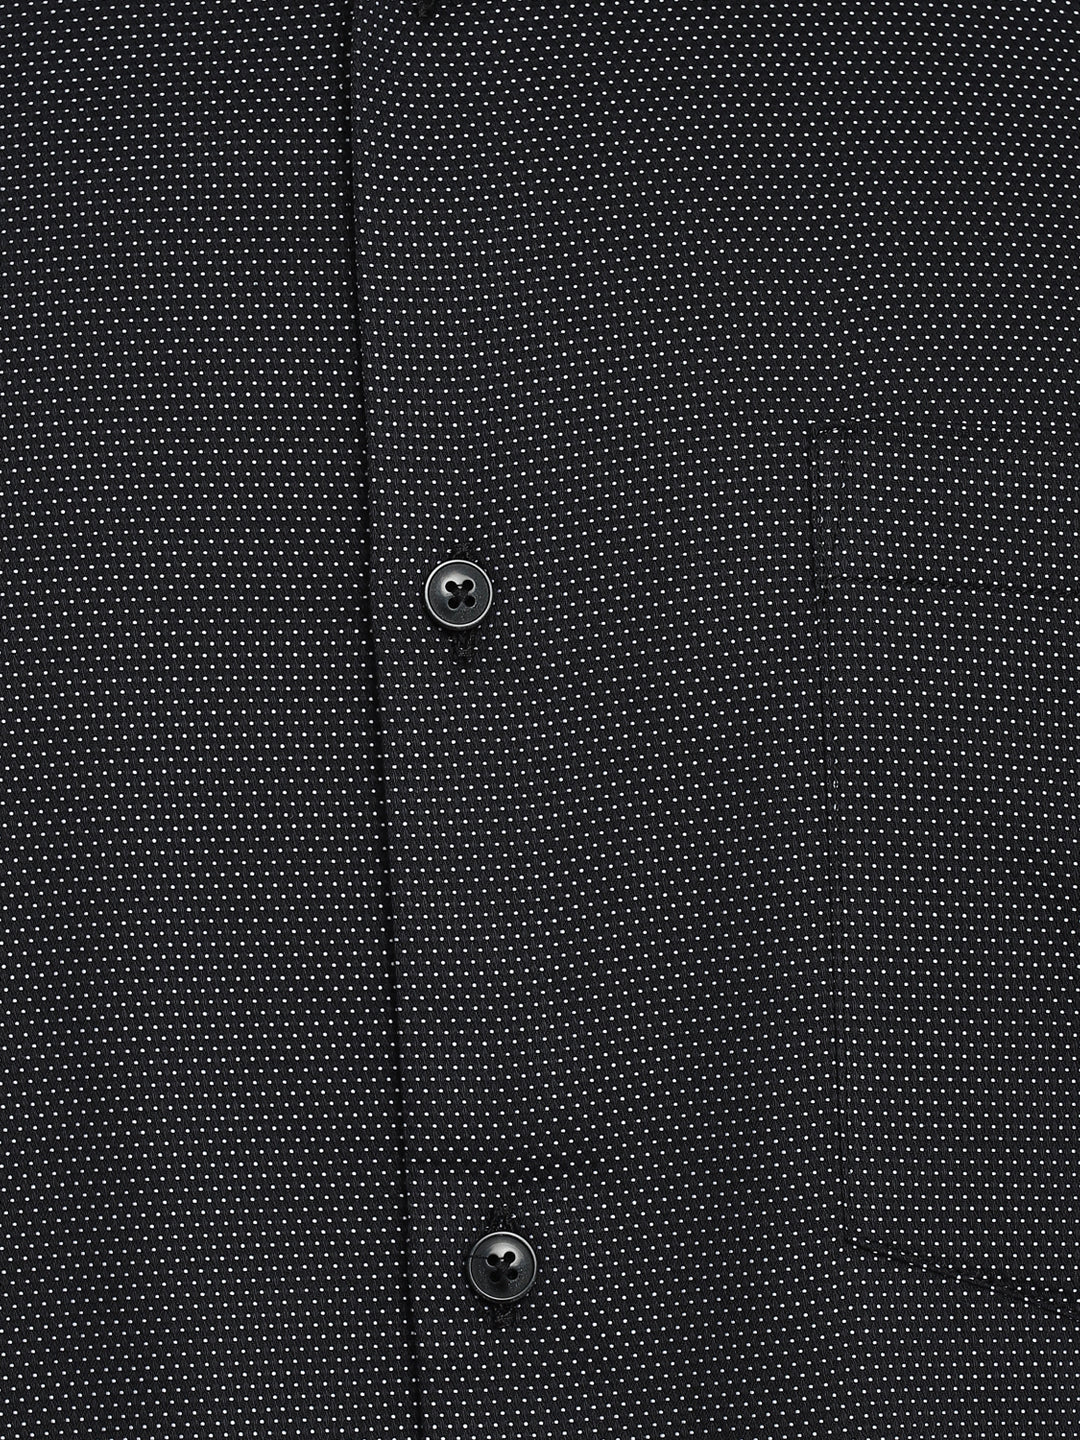 Cotton Blend Black Slim Fit Self Design Shirt